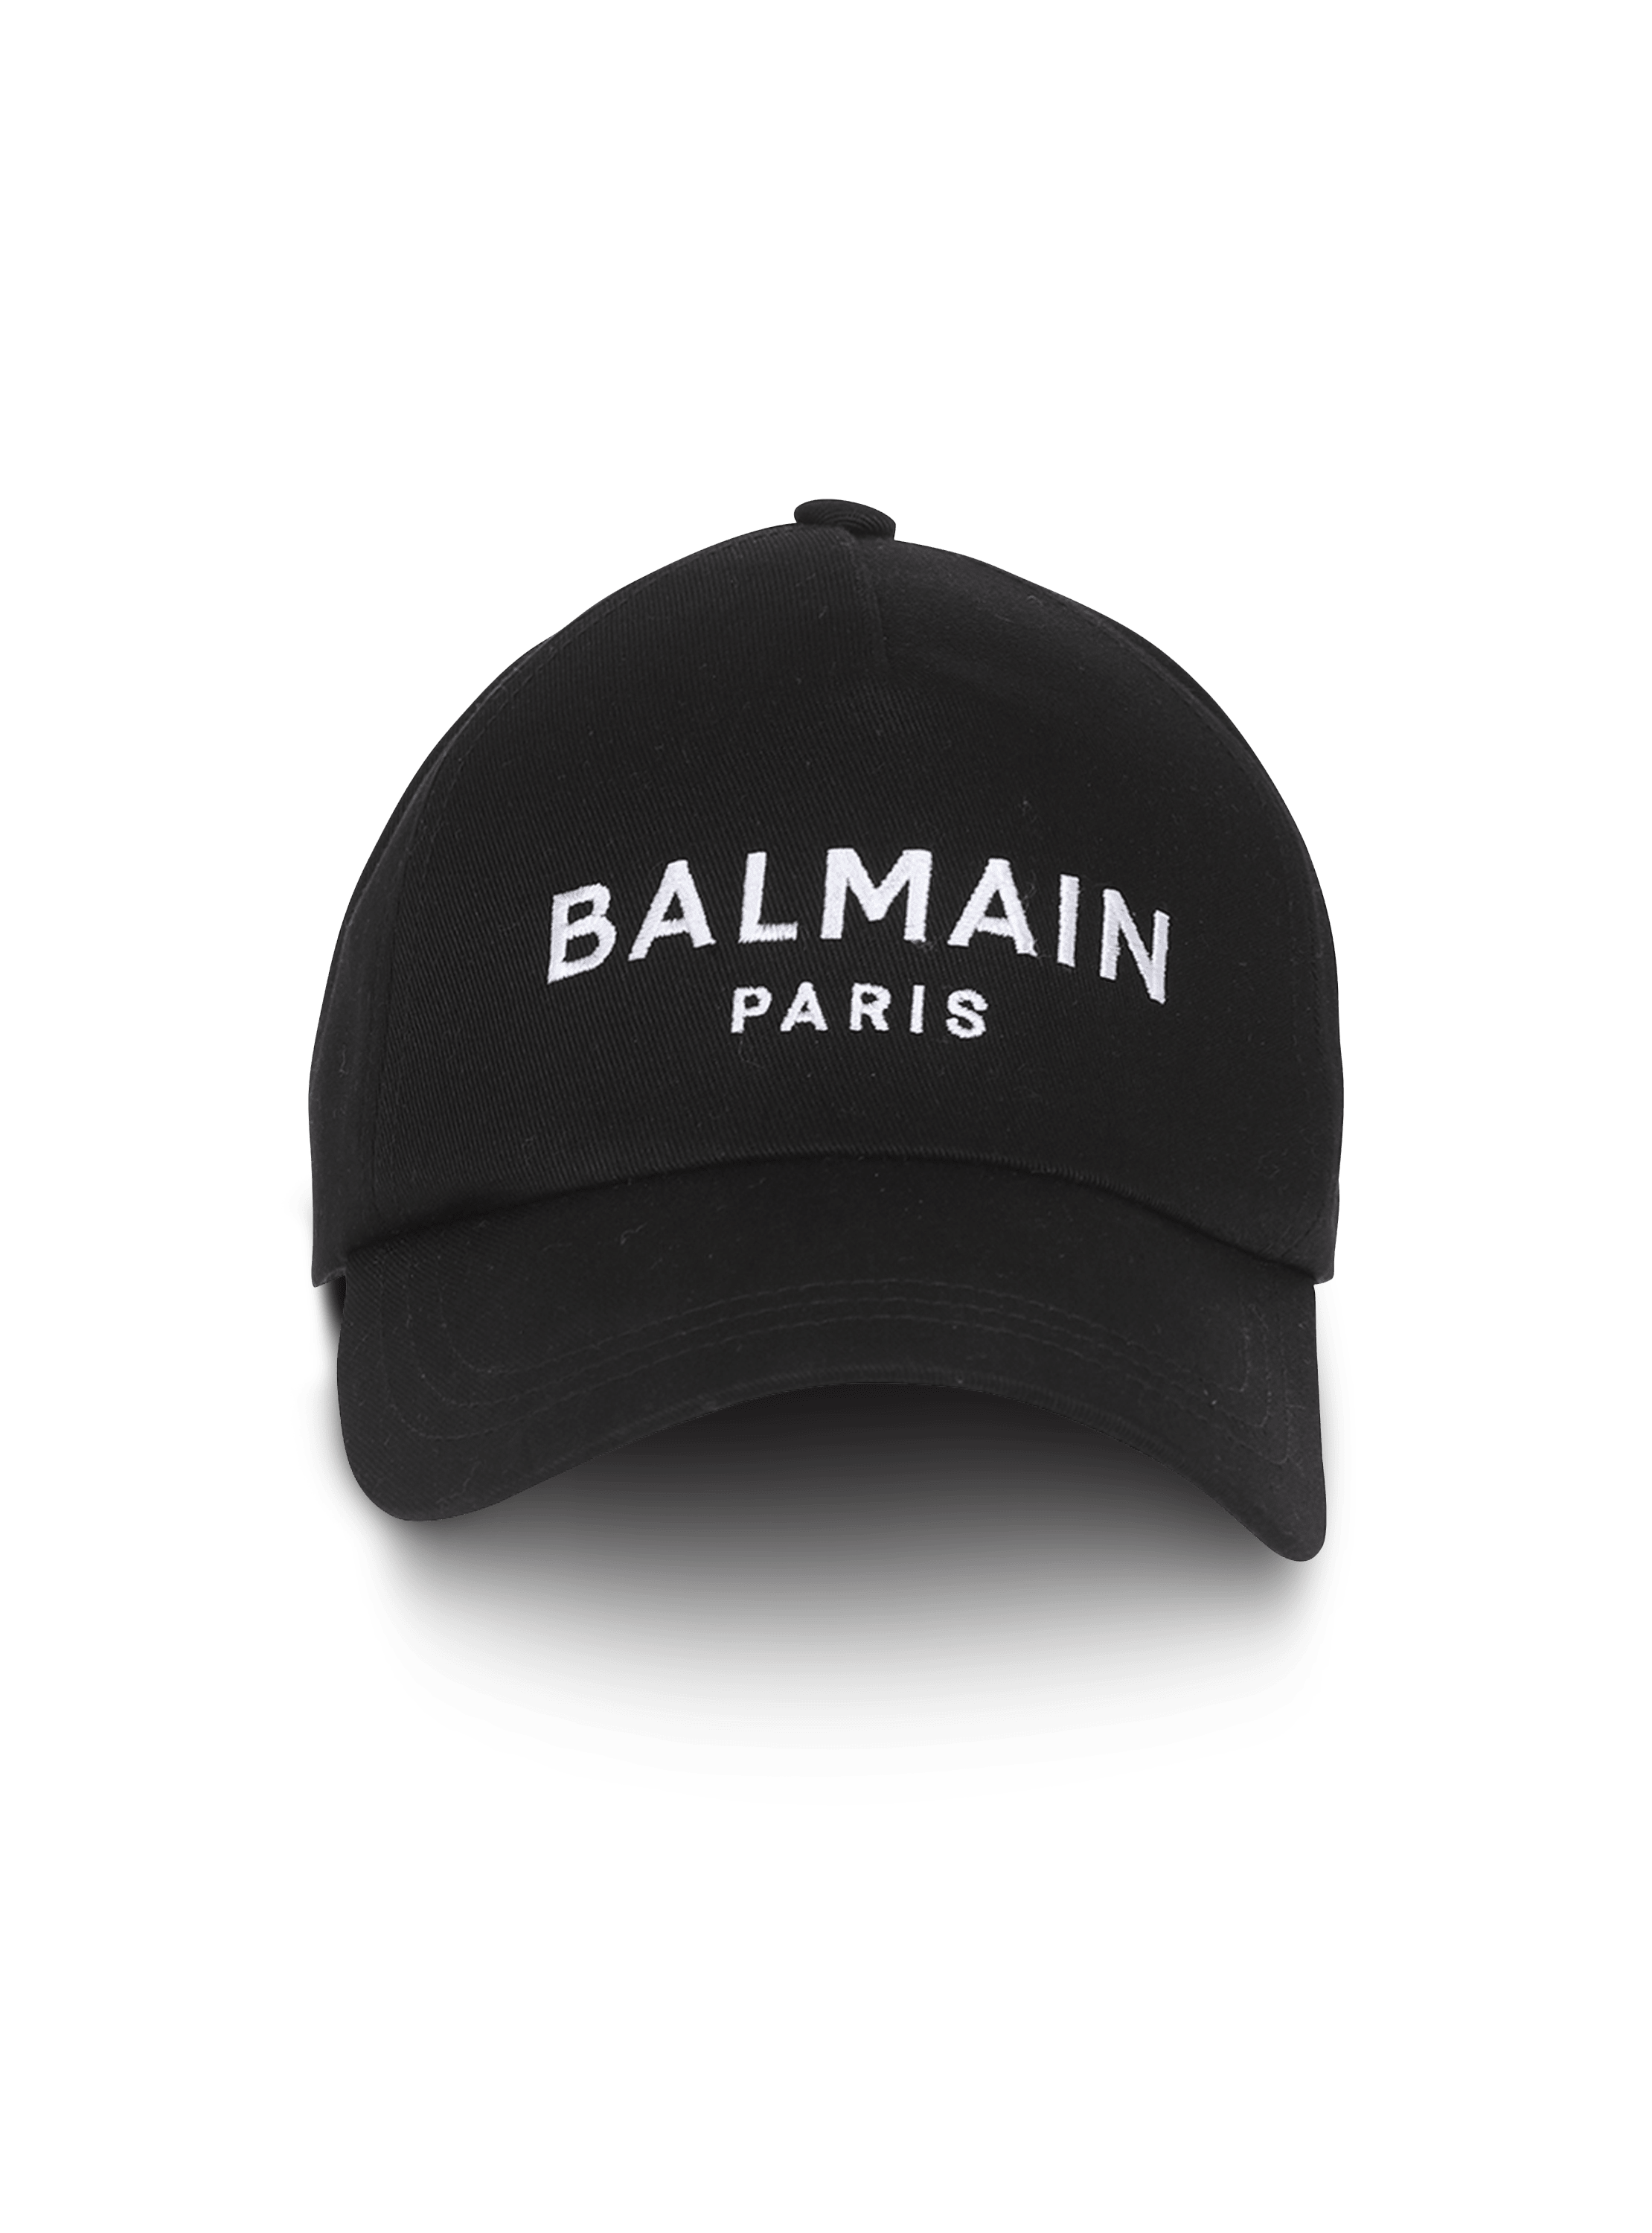 Balmain Paris 刺绣帽子